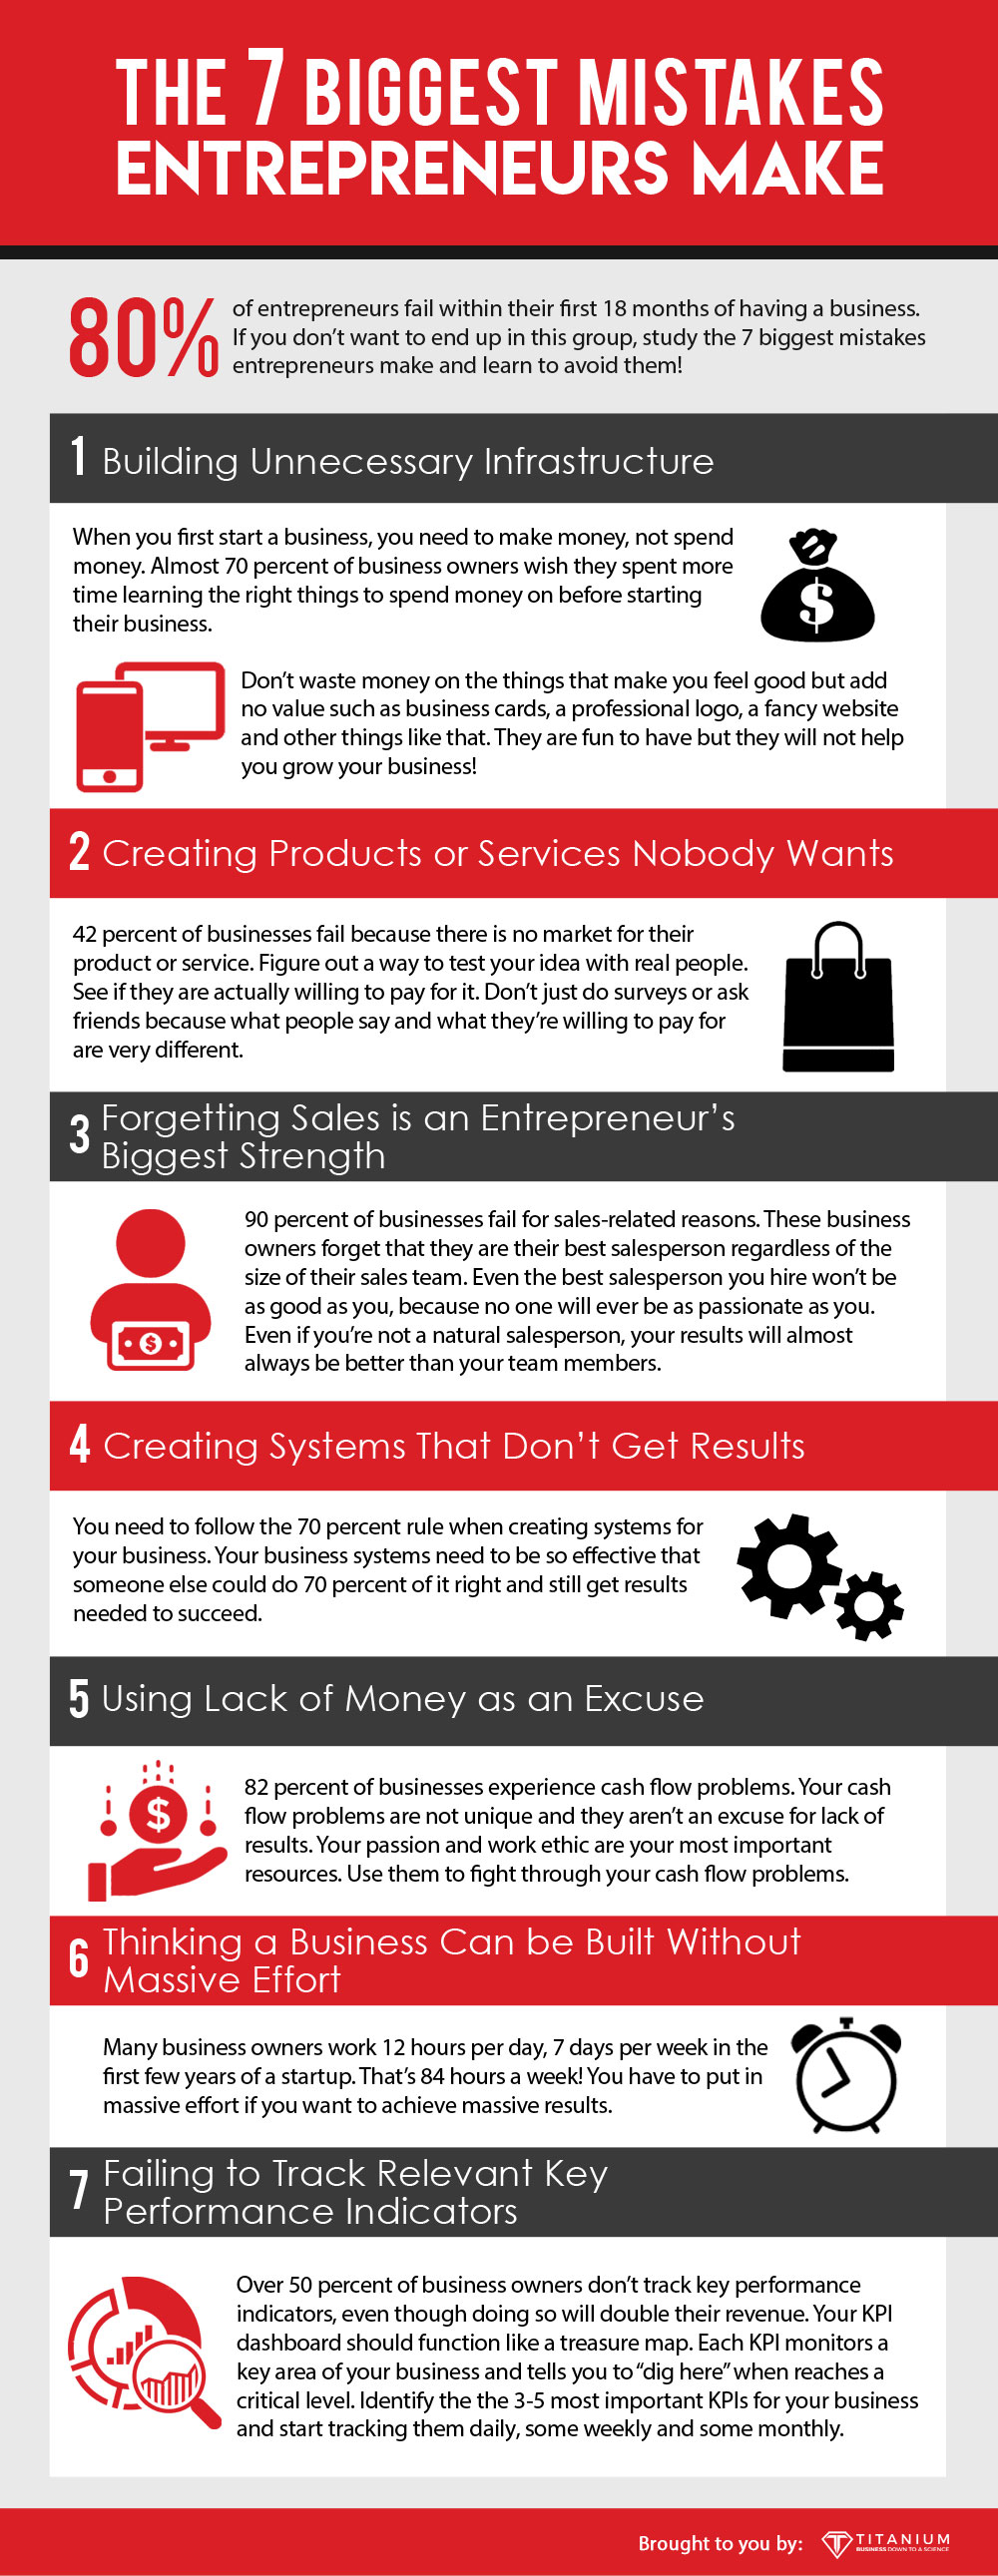 the 7 biggest mistakes entrepreneurs make